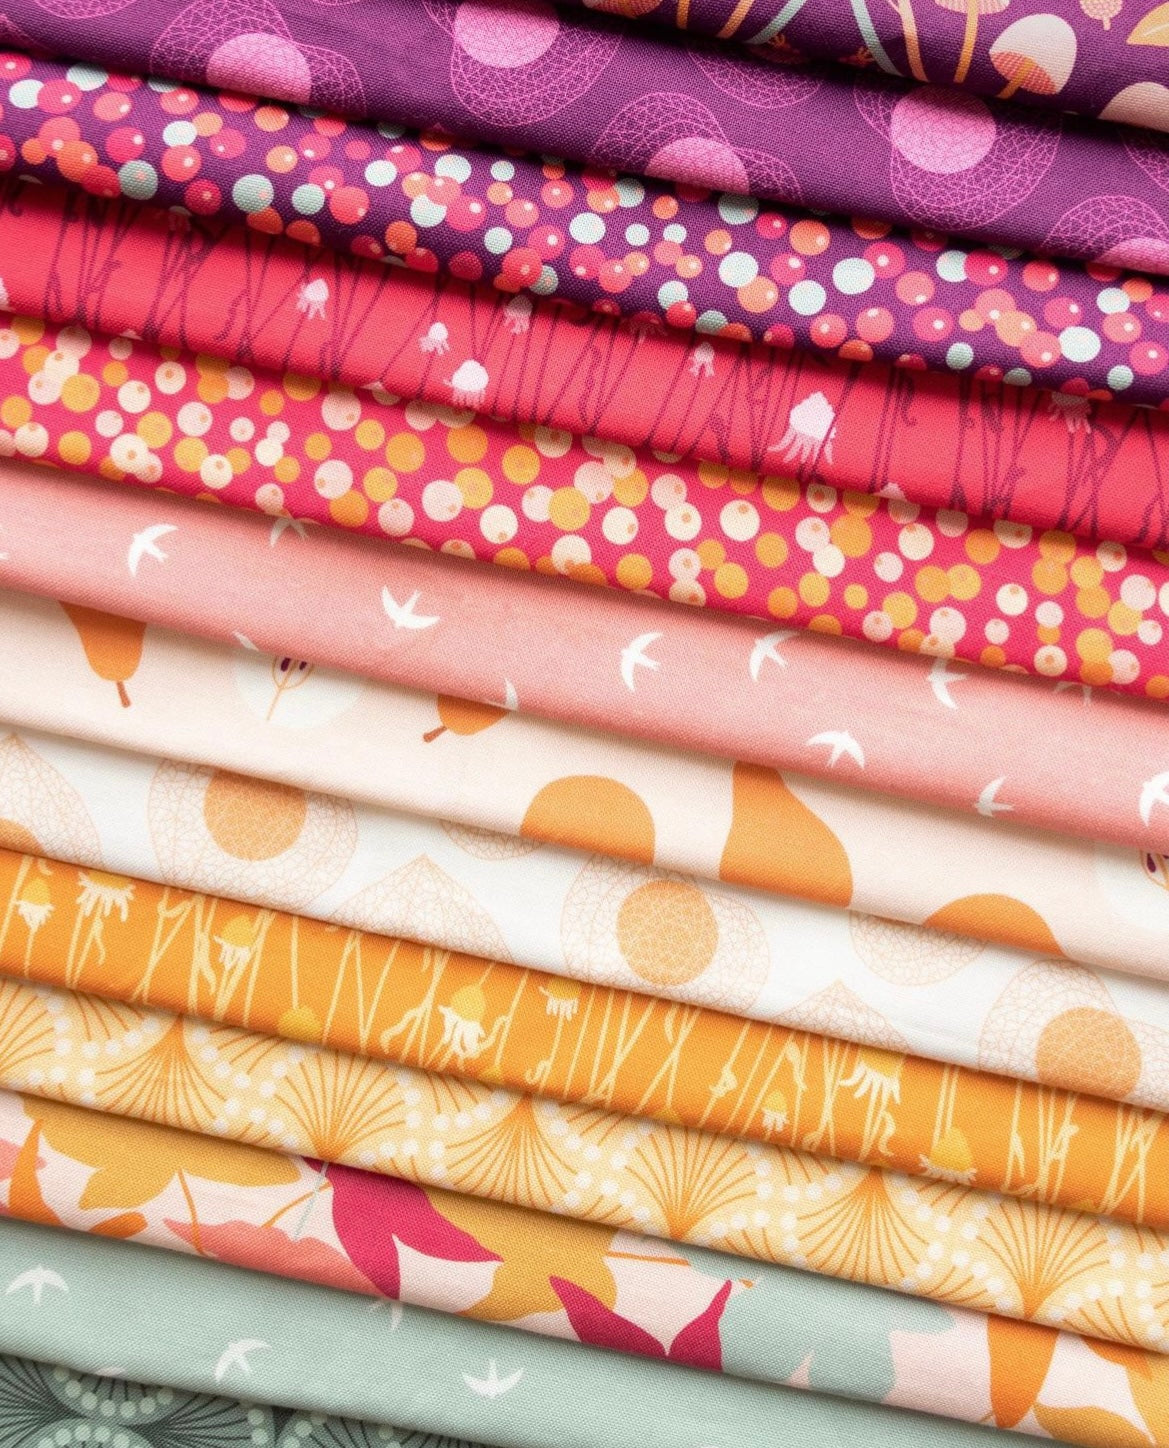 Pears - Orange - Splendor Collection by Pippa Shaw - Figo Fabrics - 100% Cotton